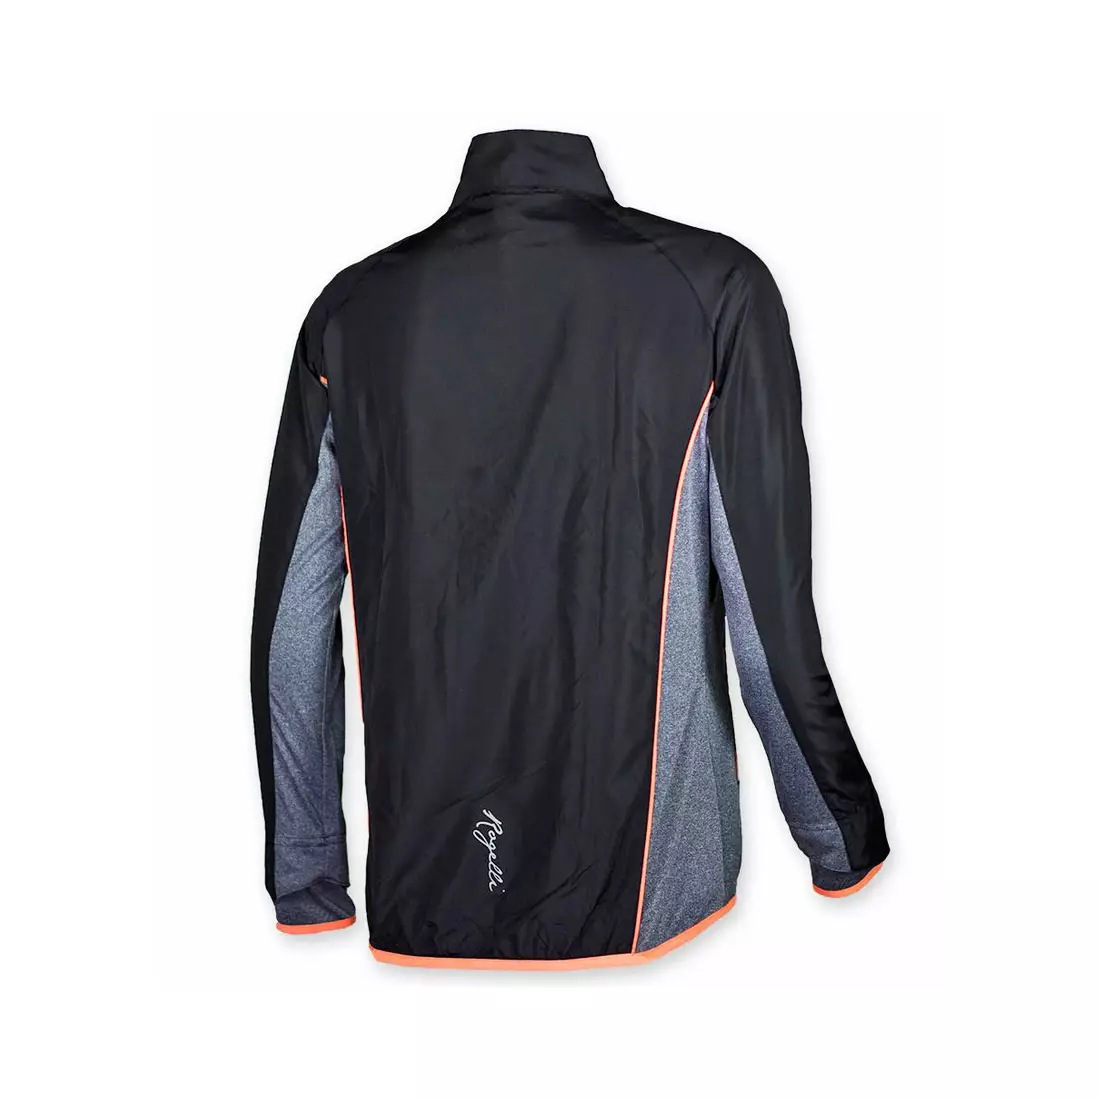 ROGELLI MARITA - women's running jacket, windbreaker 840.860 - black and pink (coral)